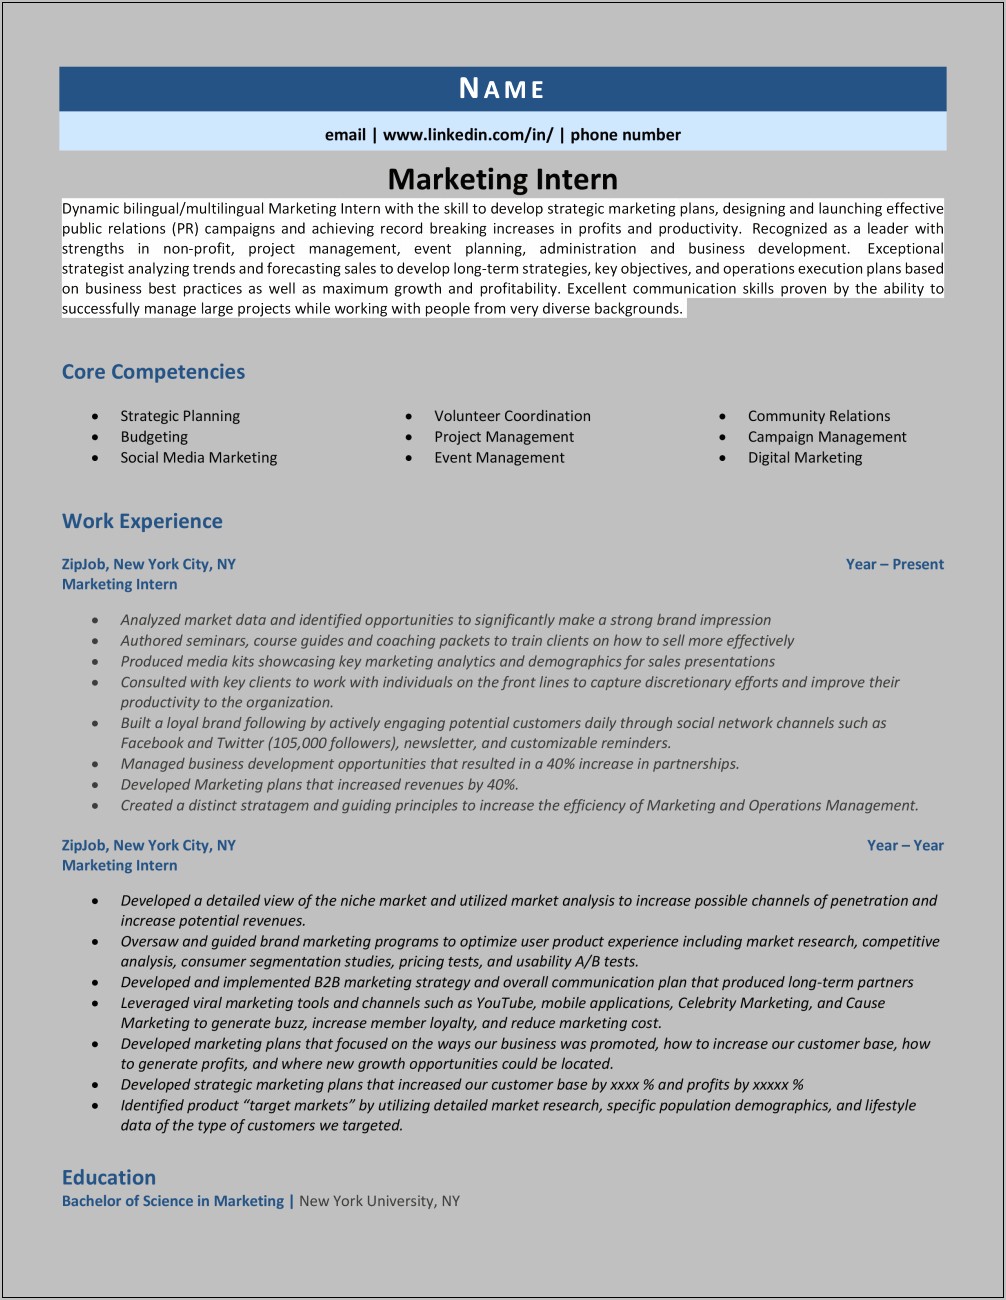 Resume Objective In Marketing Or Sales Internship